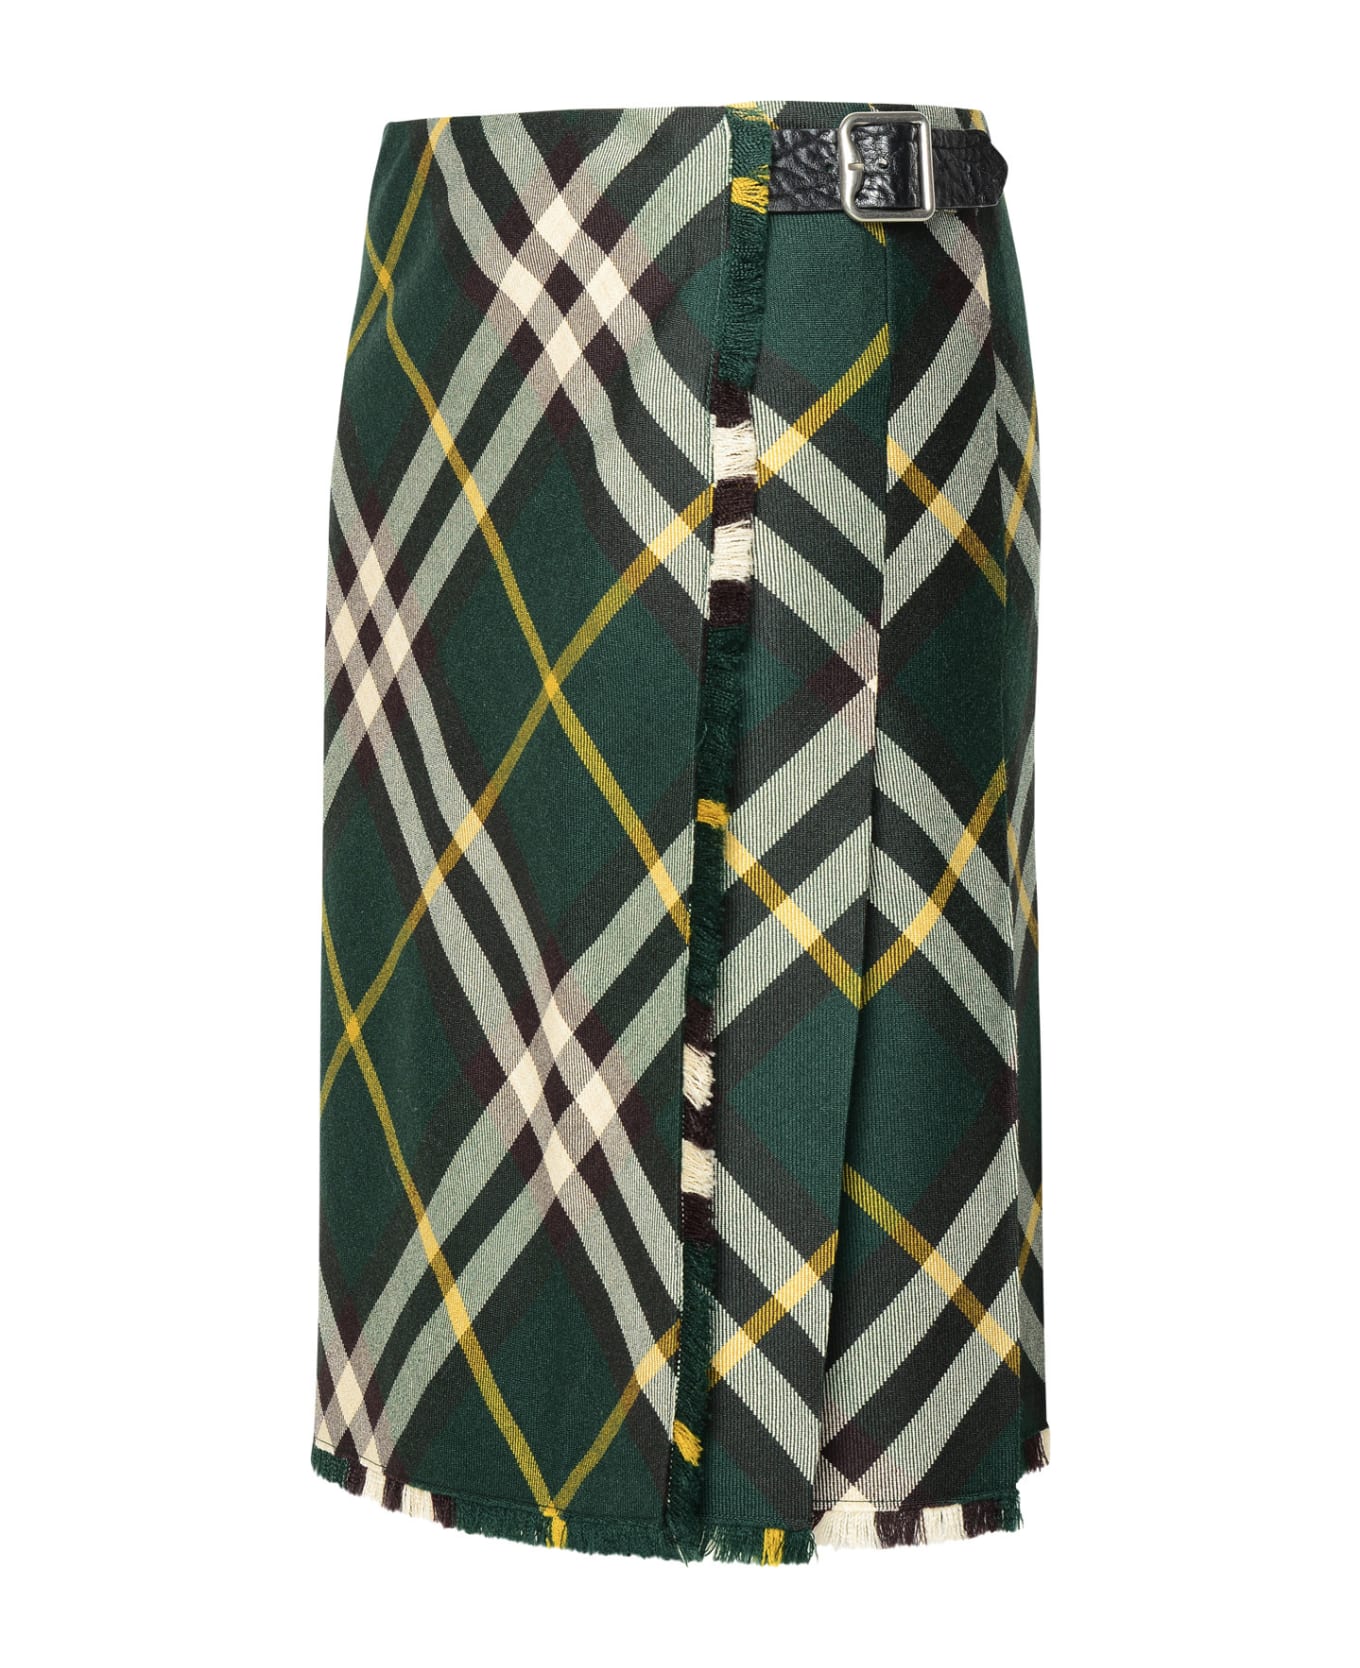 Burberry Green Wool Skirt - Ivy ip check